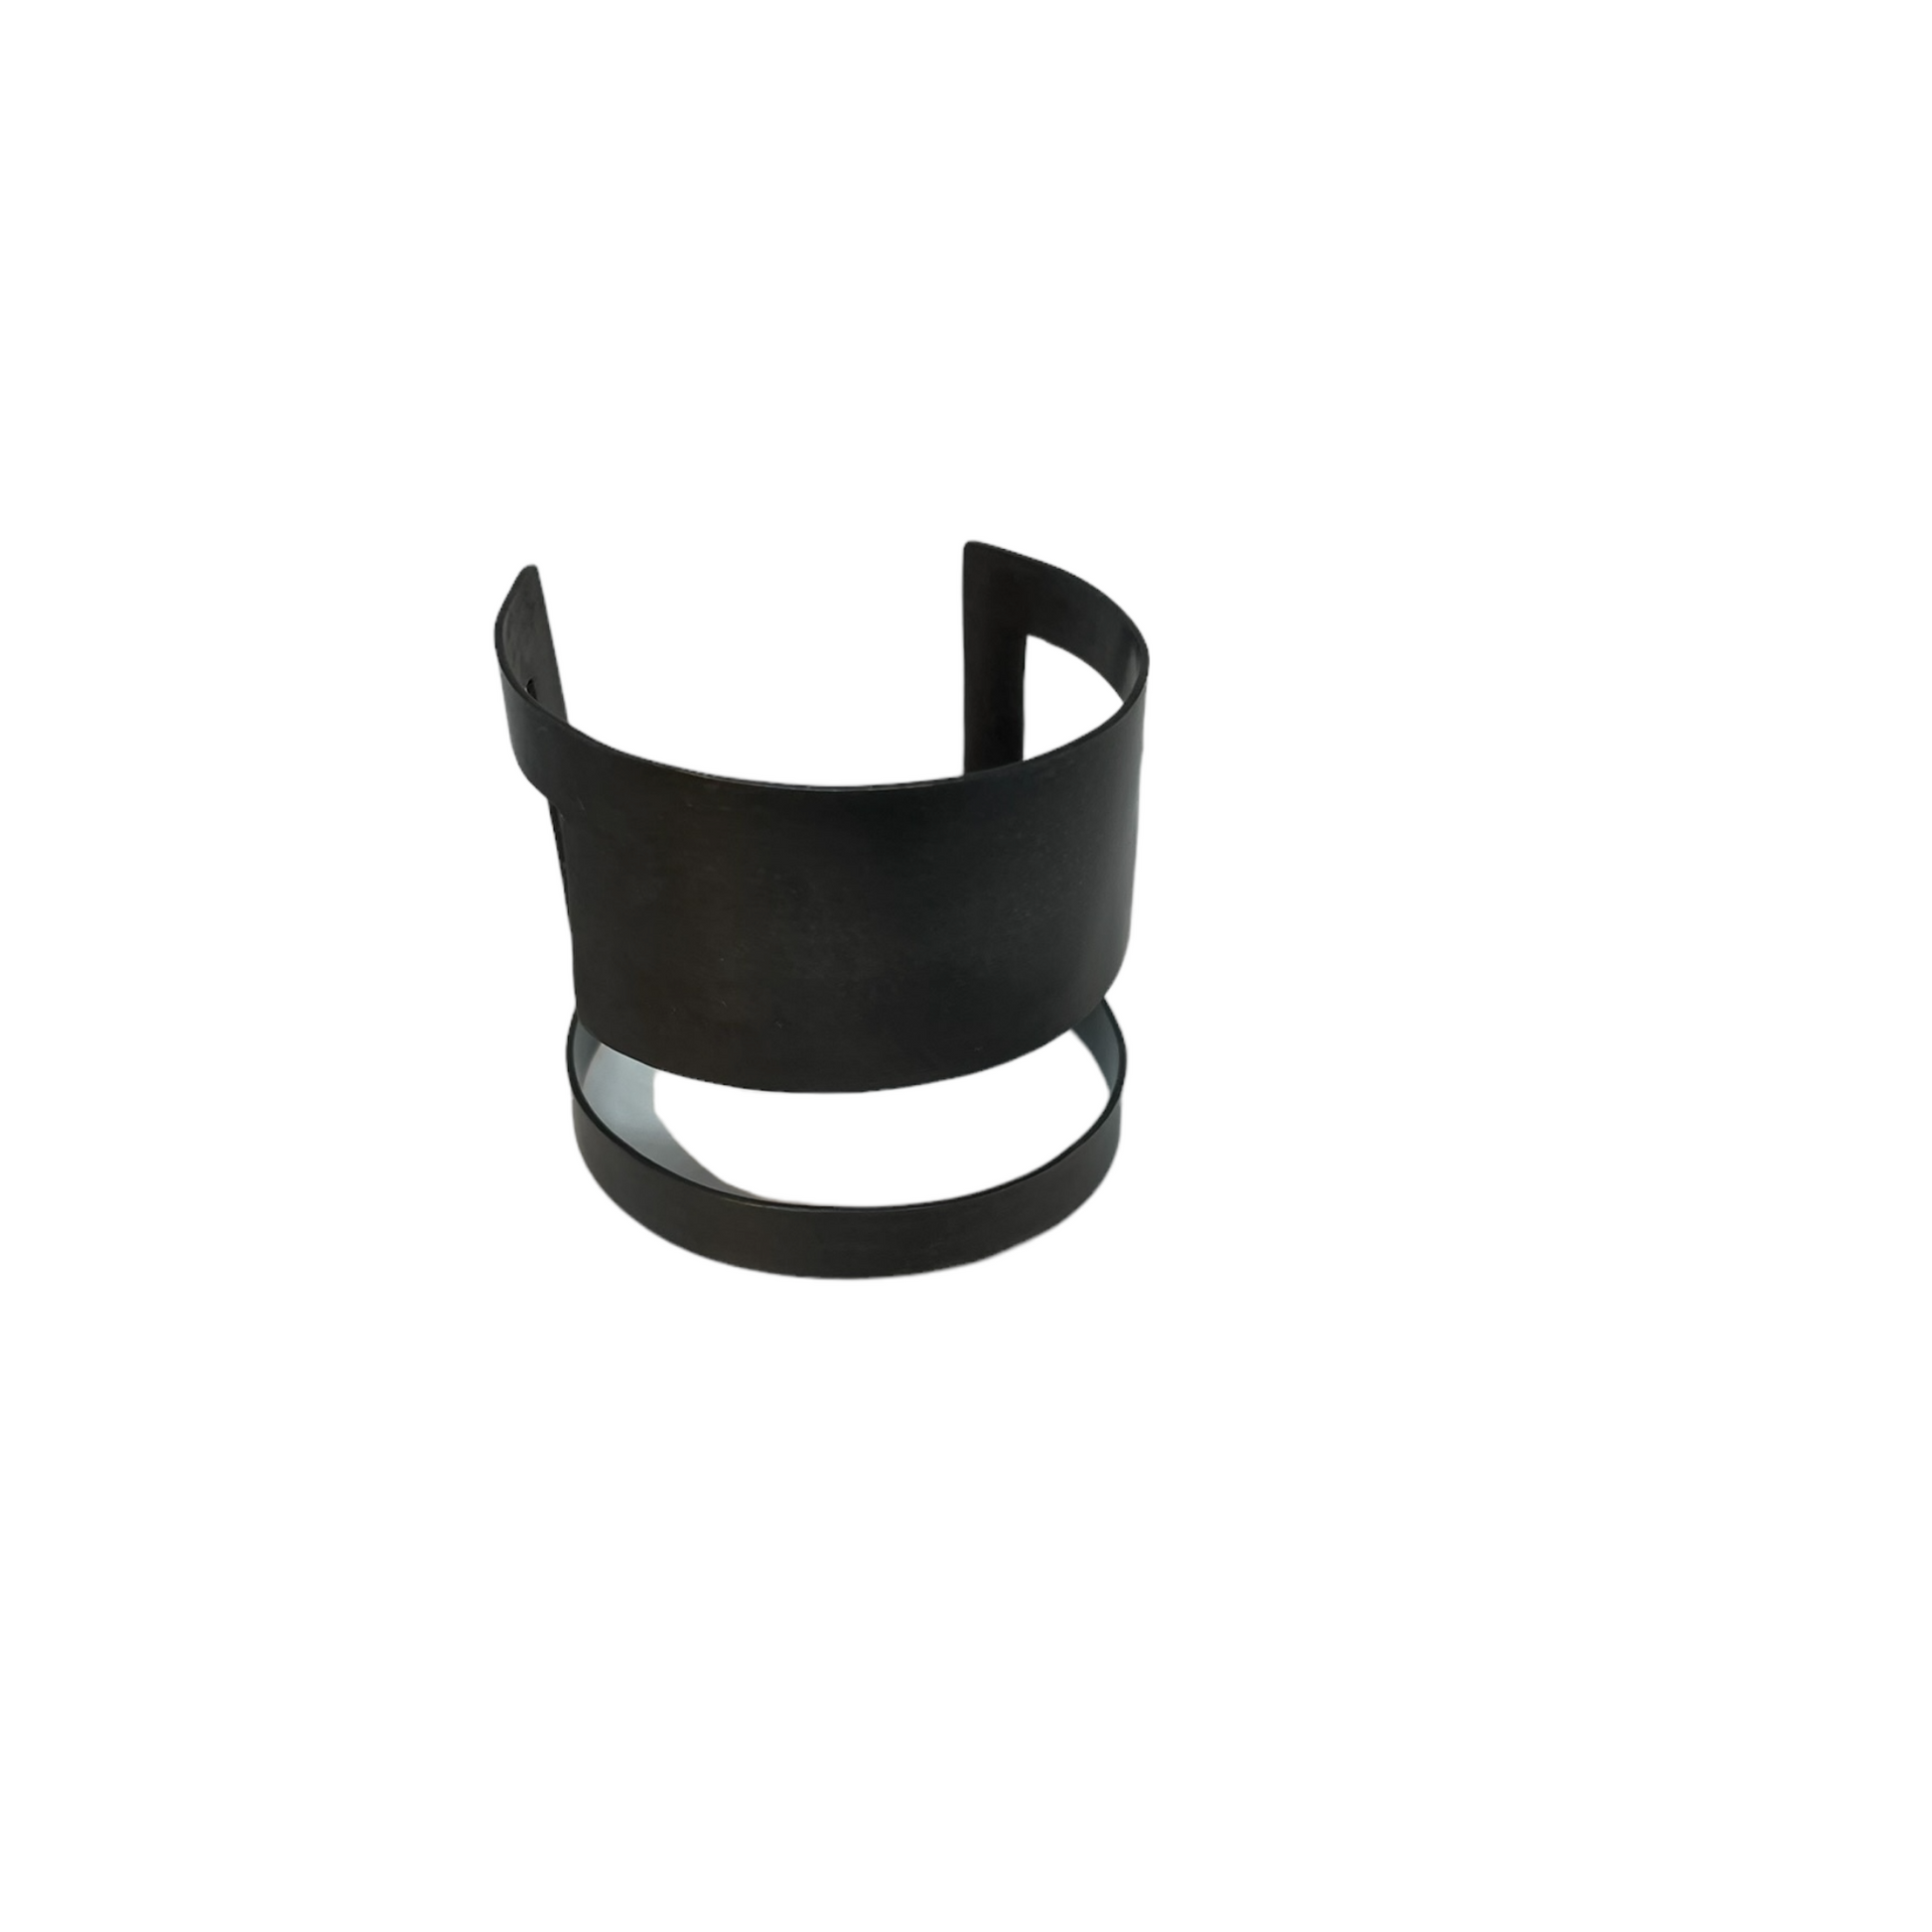 Oxidised brass cuff bracelet | Black Internal Ideas Bracelet - CURIUDO